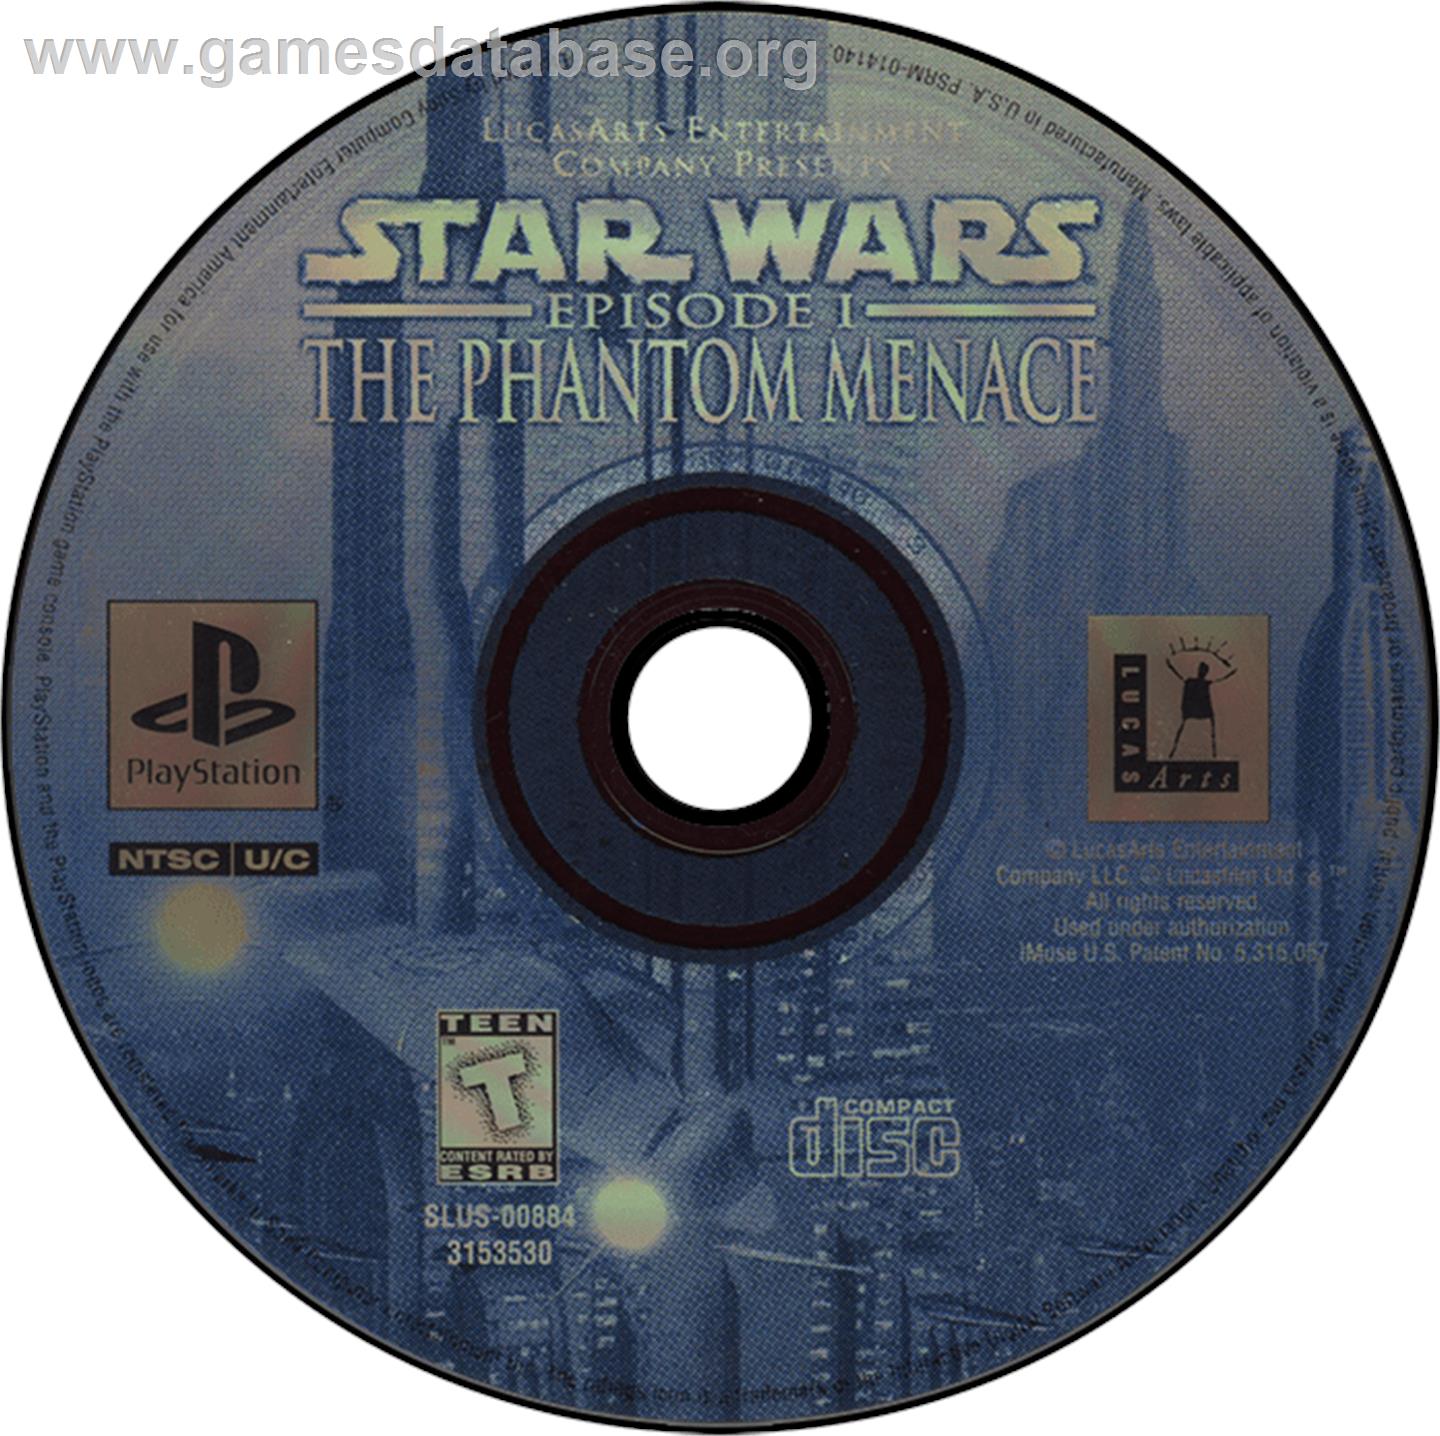 Star Wars: Episode I - The Phantom Menace - Sony Playstation - Artwork - Disc